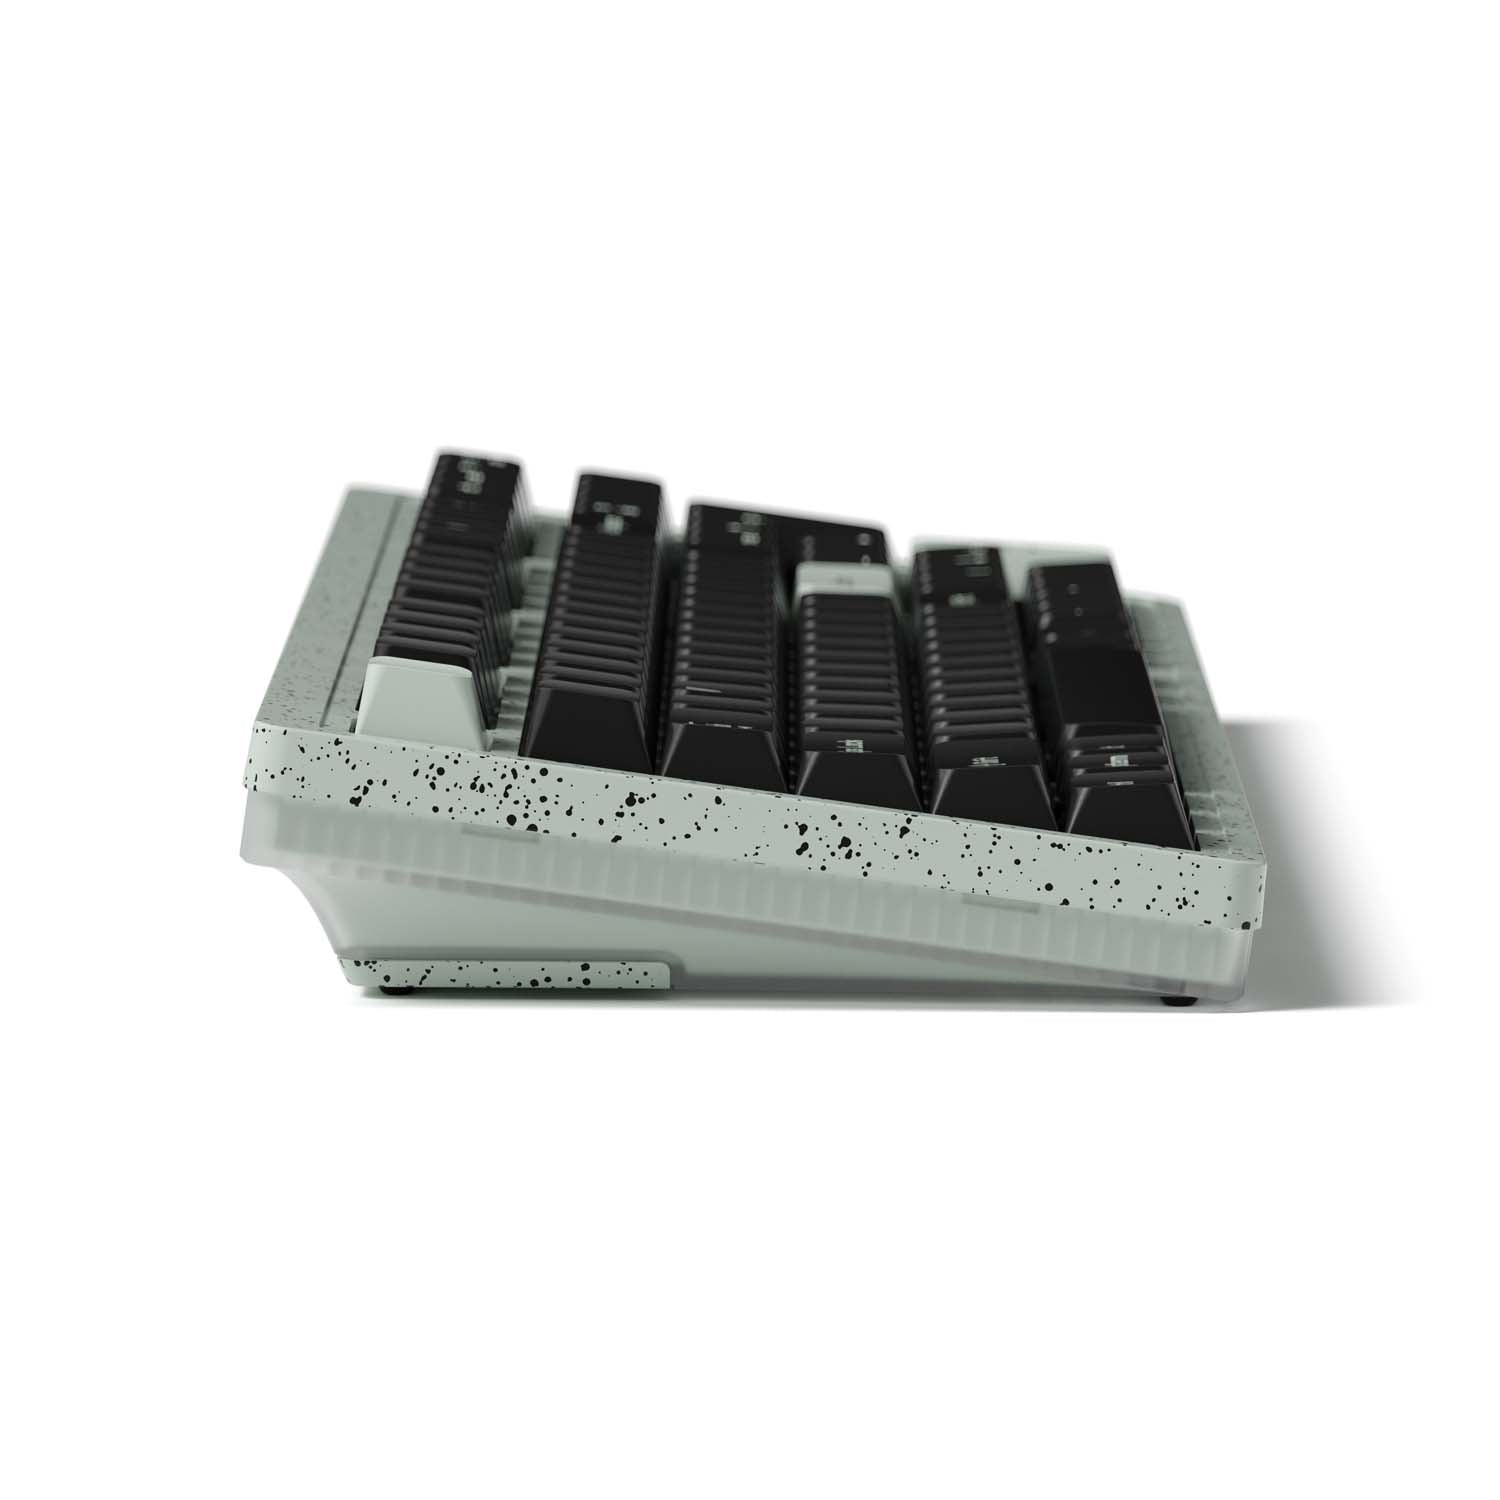 MelGeek Modern97 Fountain Work&Game Compact Mechanical Keyboard